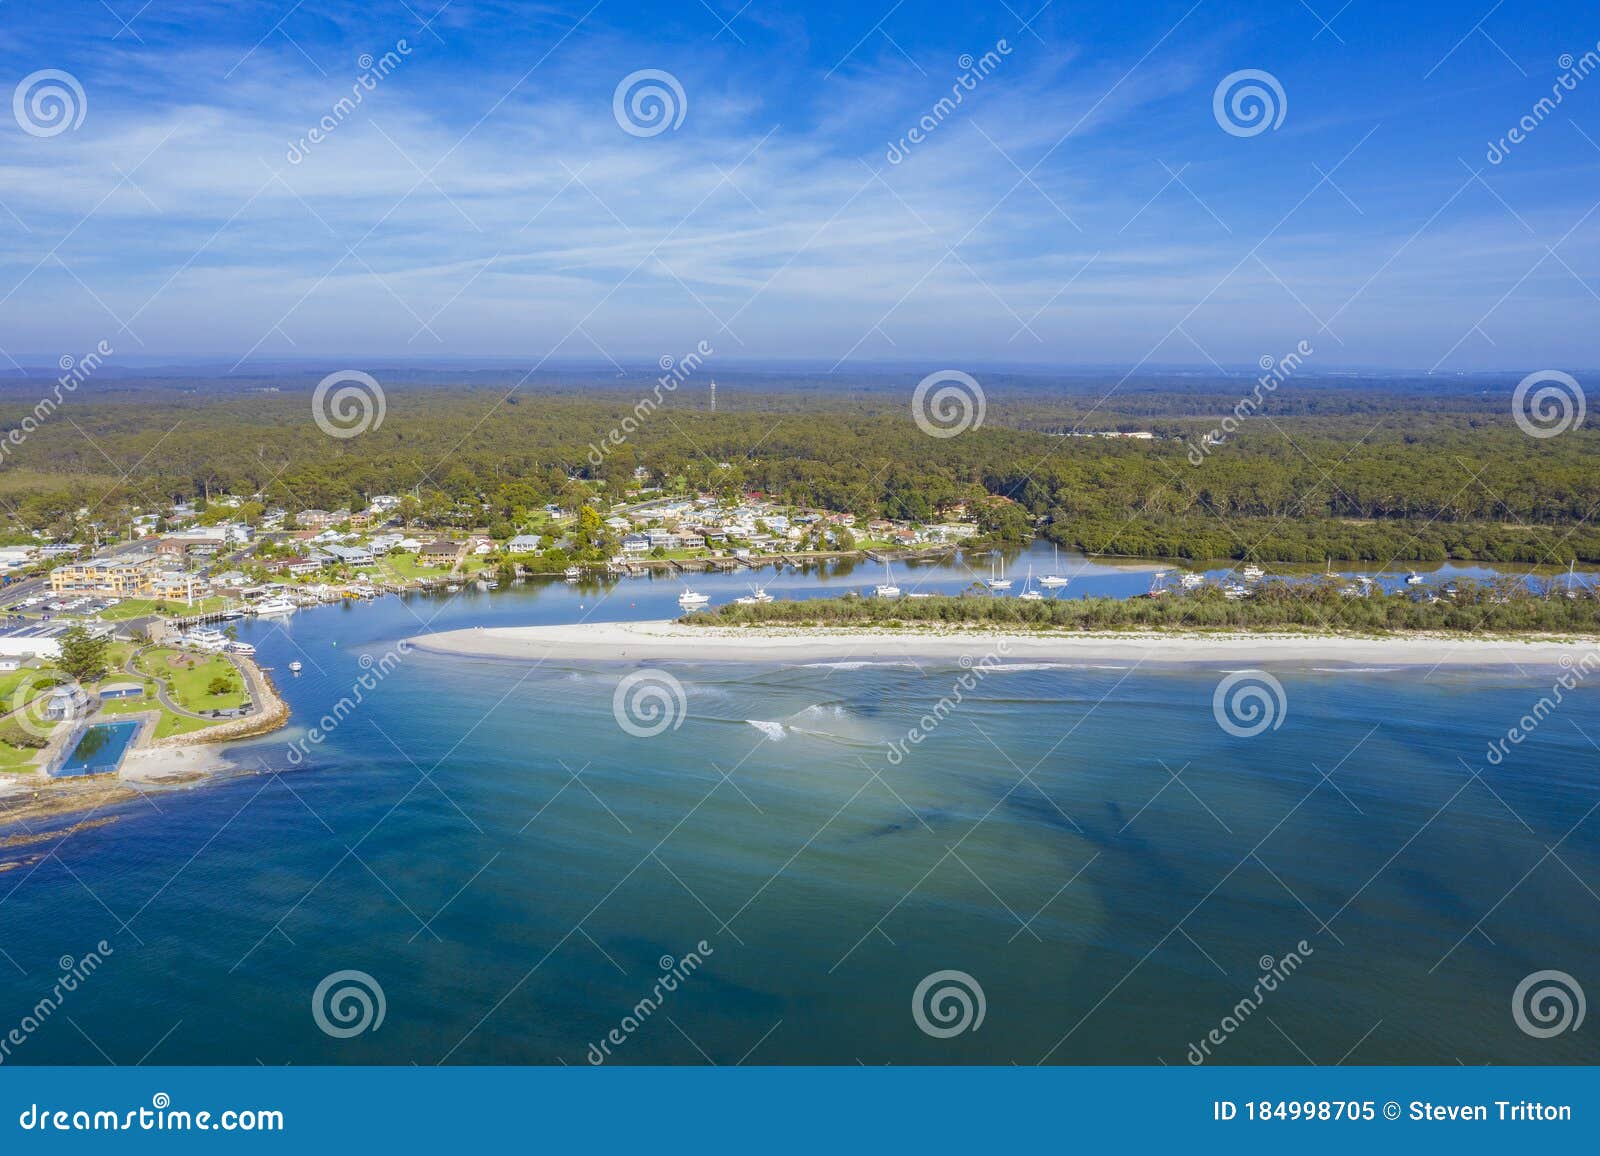 erial view of huskisson near jervis bay, nsw south coast, australia